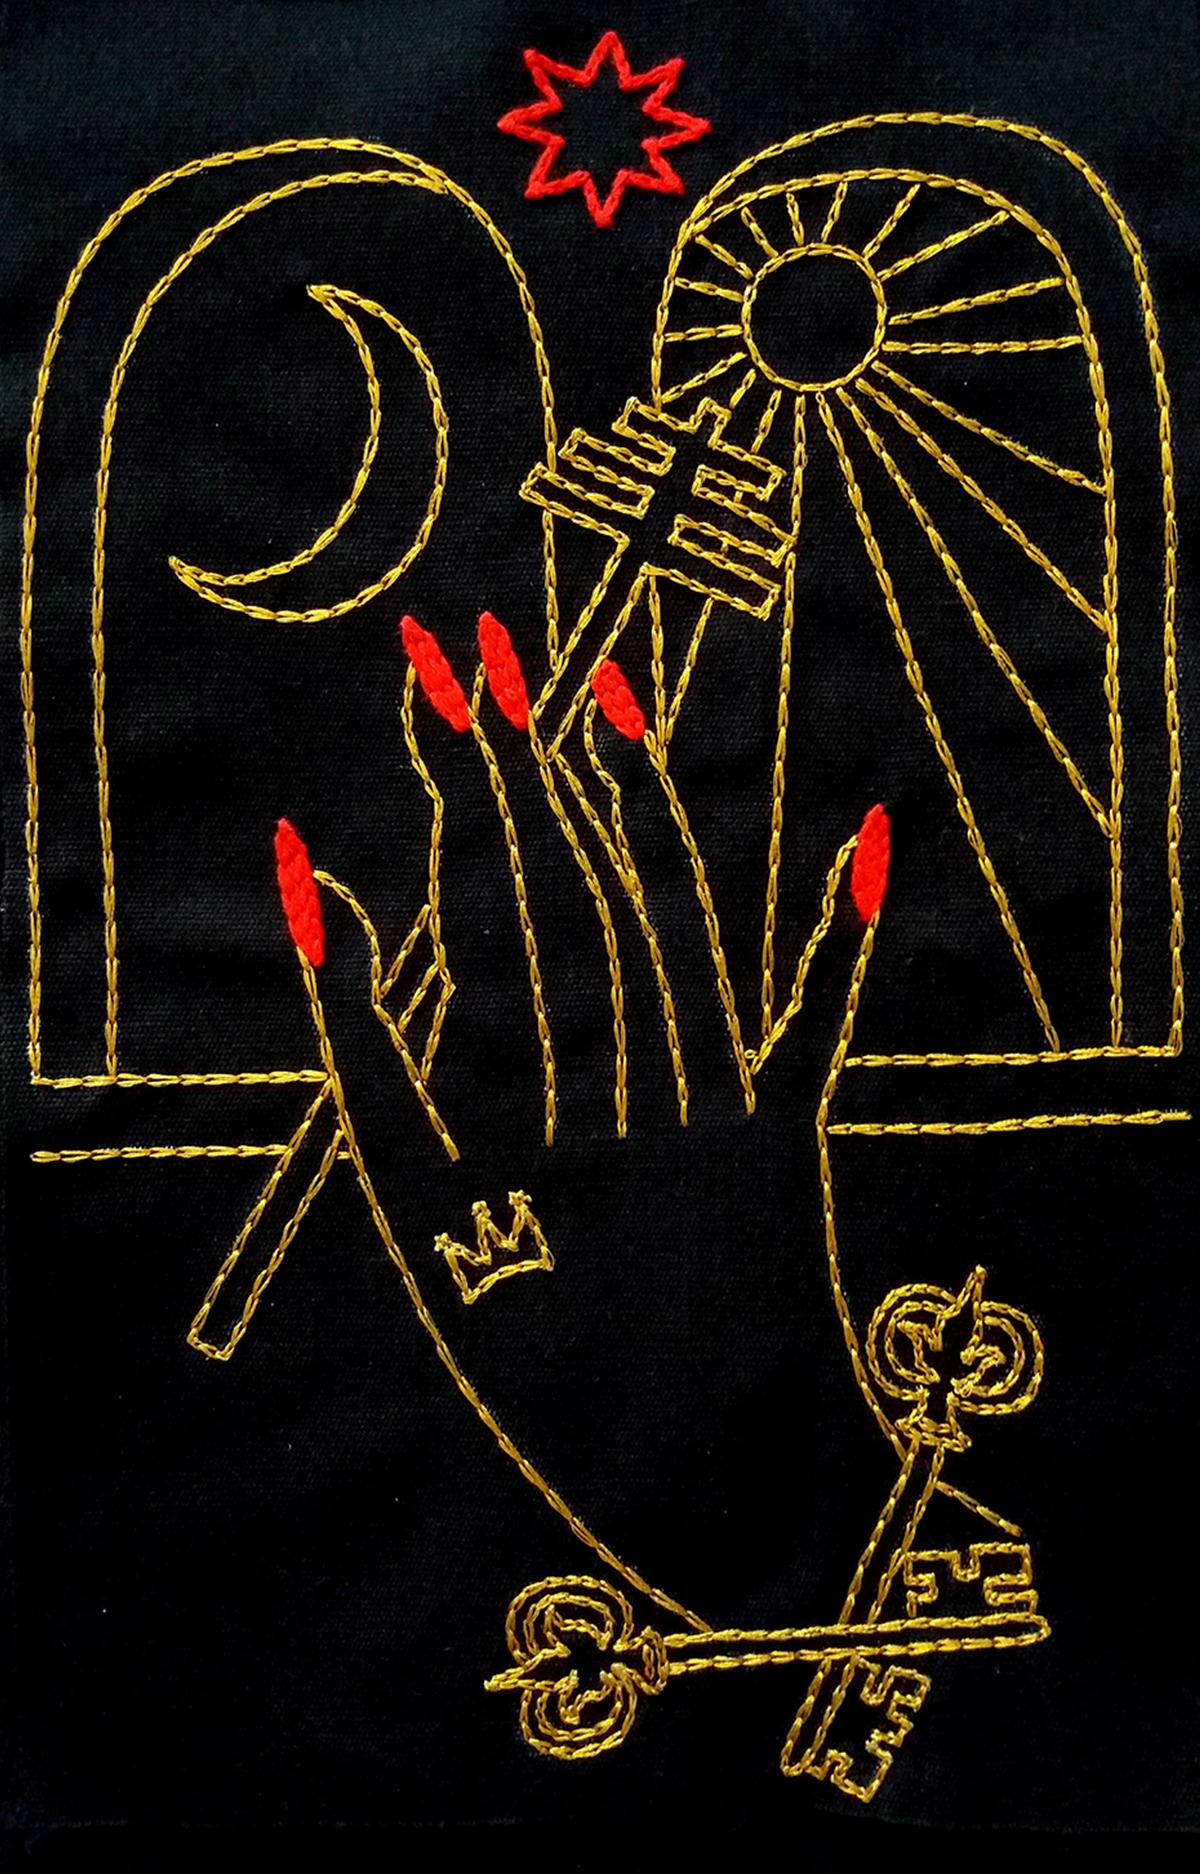 El Sumo Sacerdote, 2019 by Maria Jose Franco Maldonado
From The Ventura Series. 
Embroidery thread on canvas
Image size: 27 cm H x 17 cm W
Frame size: 40 cm H x 30 cm W x 3 cm D
Unique

Blackwood frame with plexiglass
___
Maria Jose Franco